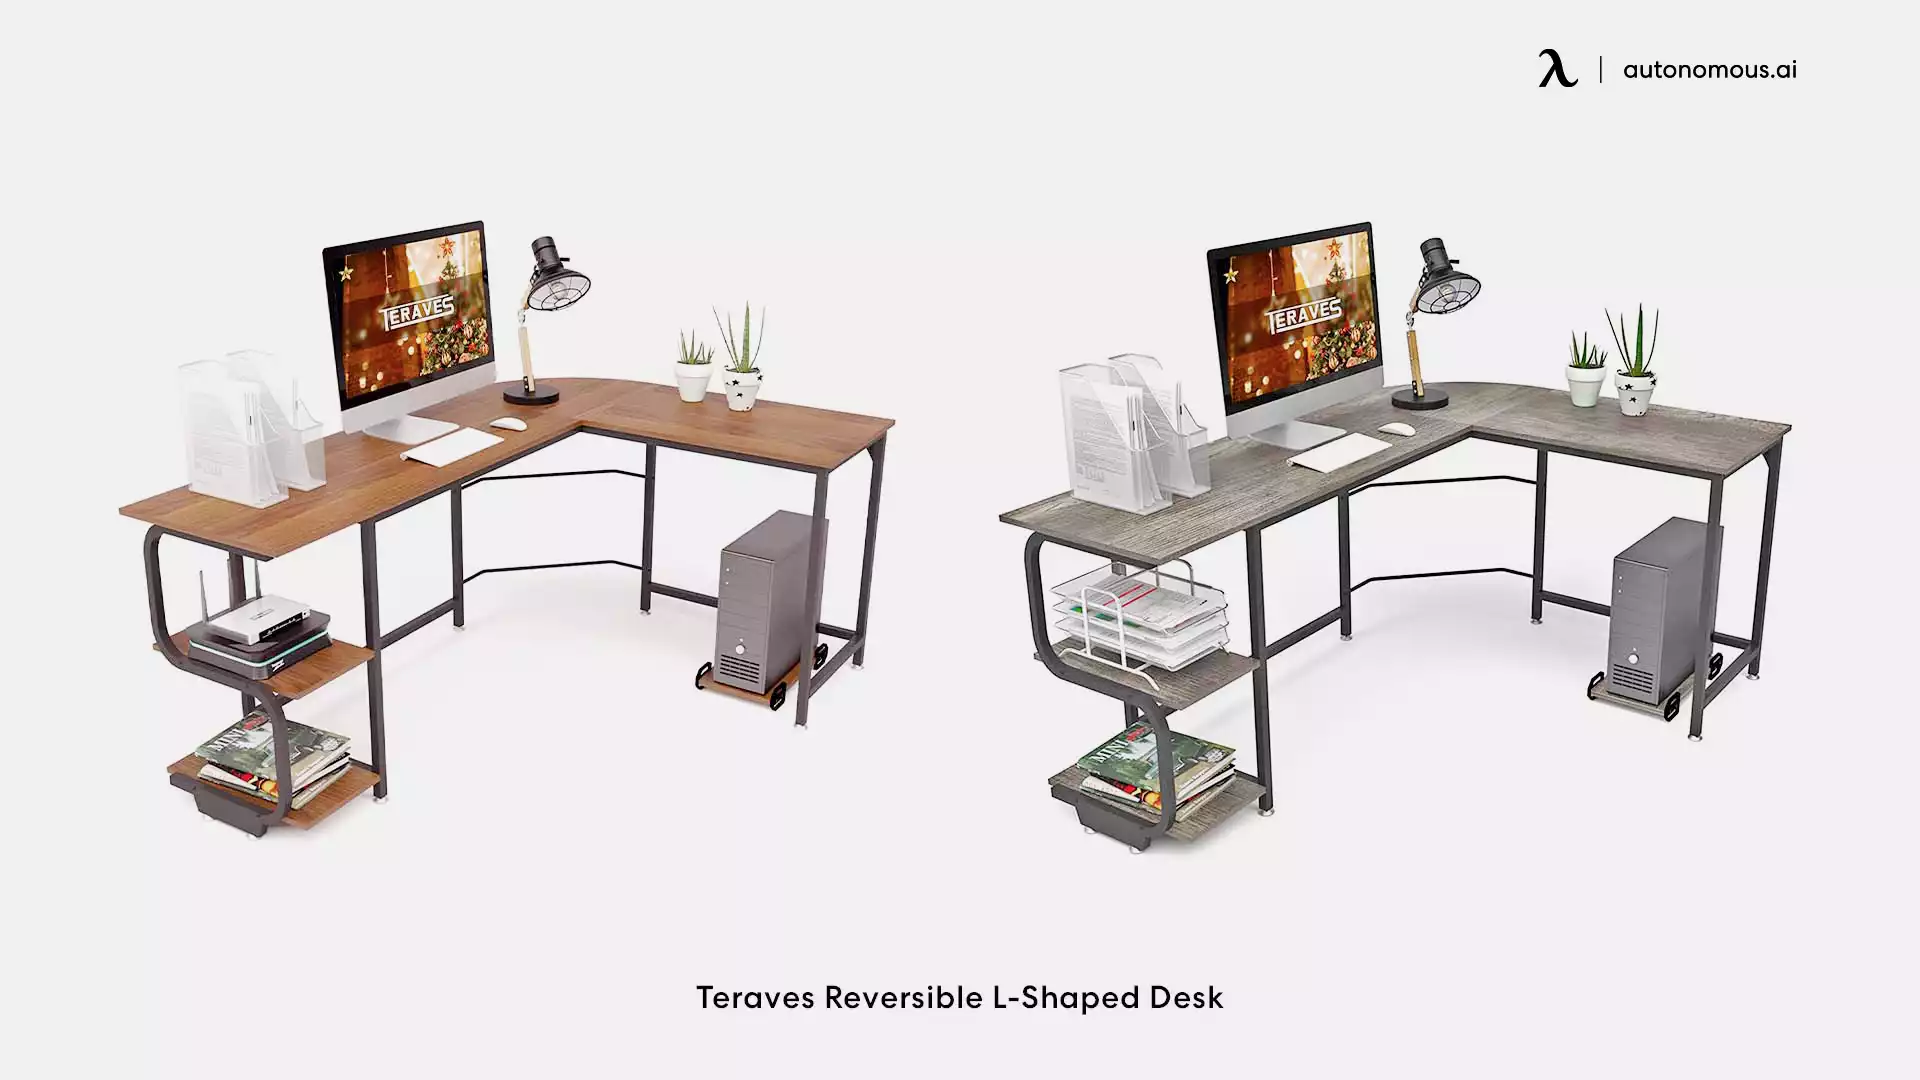 Teraves Convertible L-shaped adjustable desk